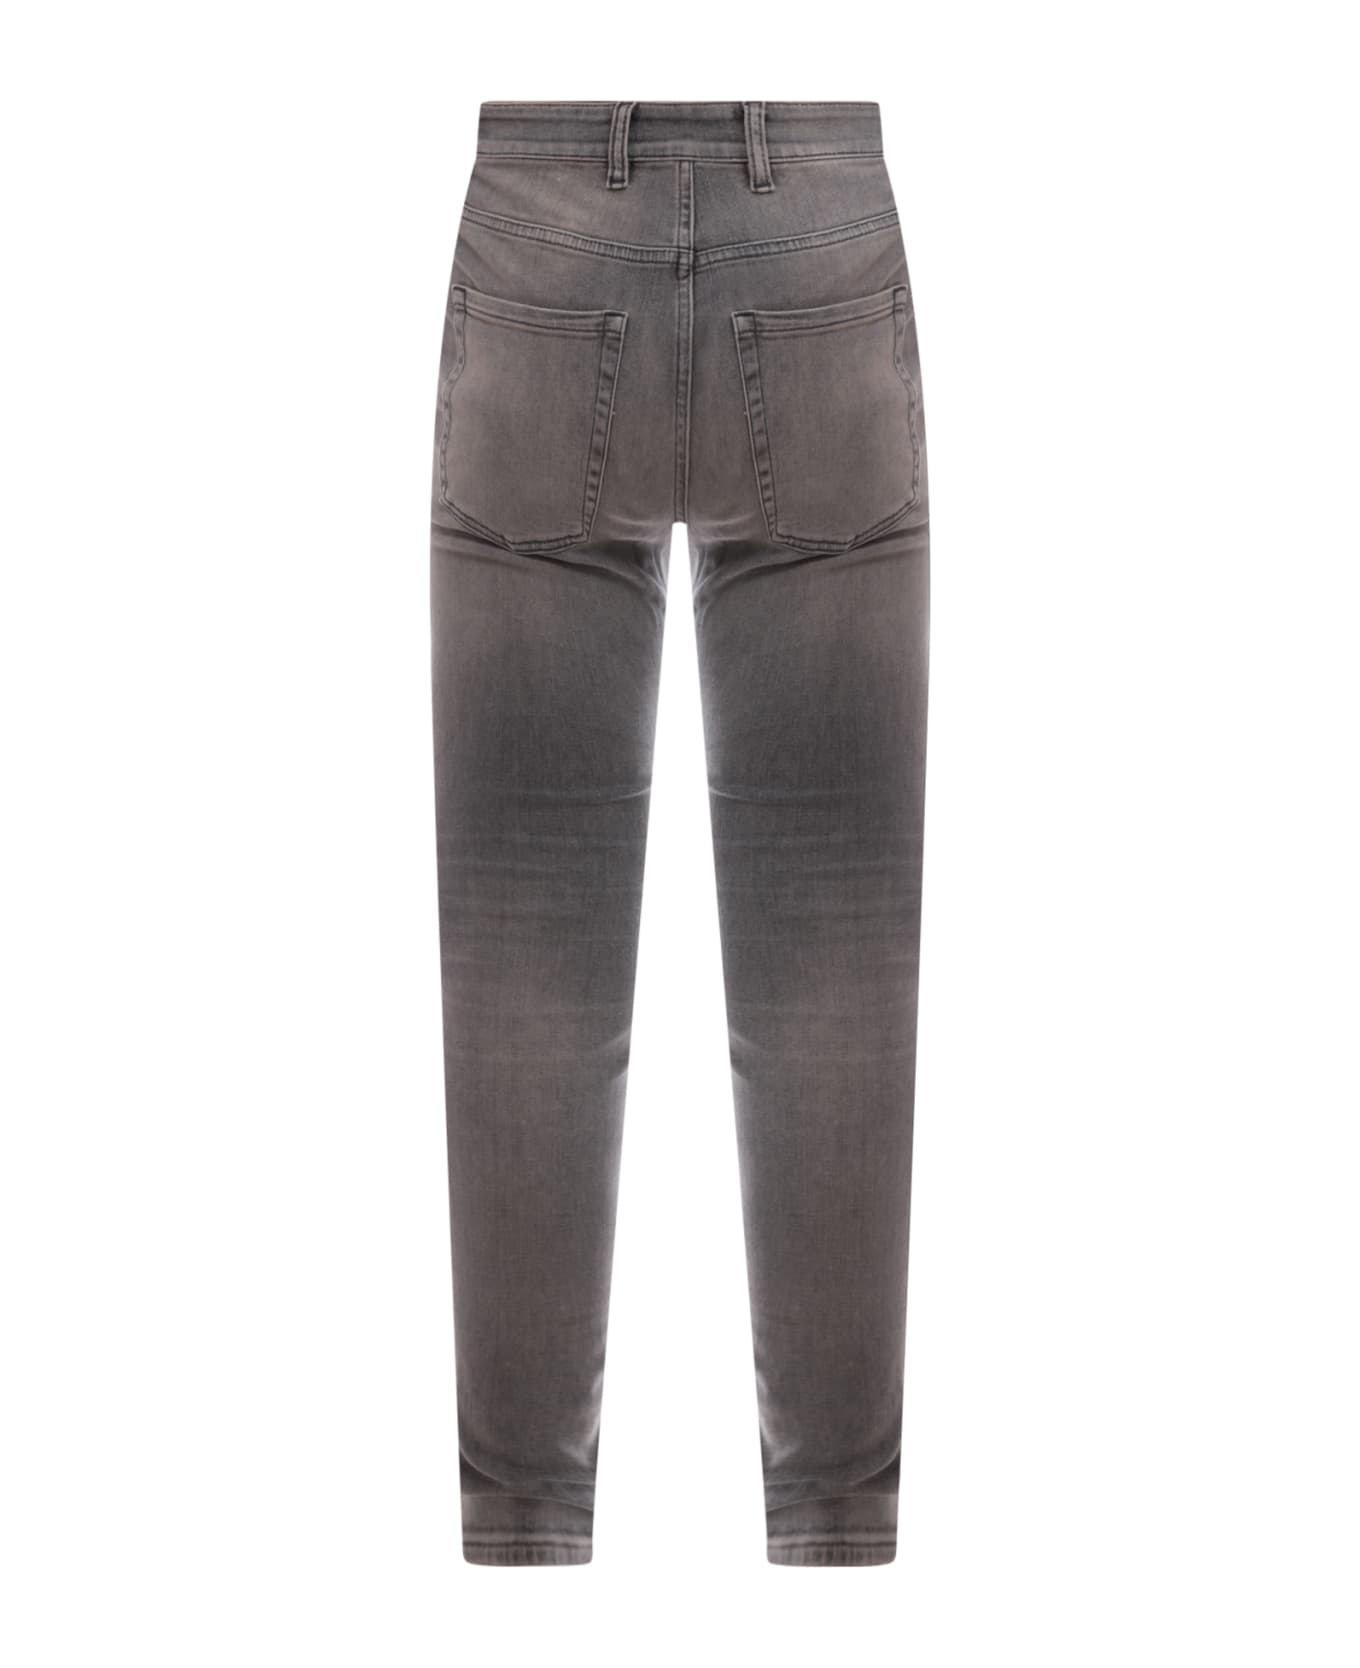 REPRESENT Jeans - Grey